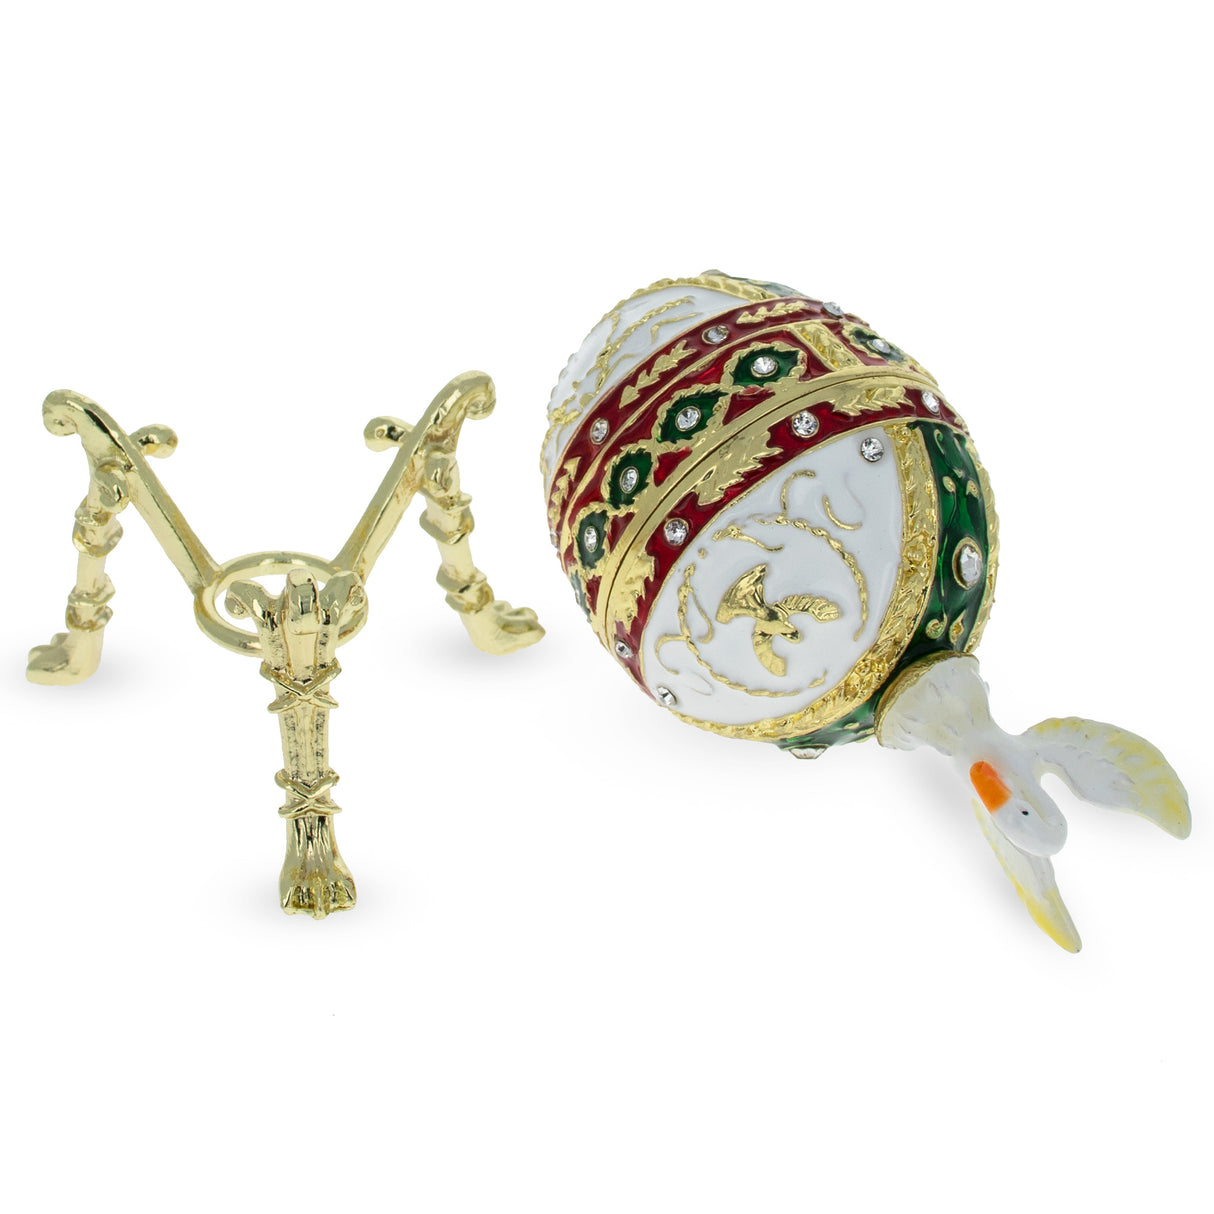 Shop 1898 Pelican Royal Imperial Easter Egg. Pewter Royal Royal Eggs Imperial for Sale by Online Gift Shop BestPysanky